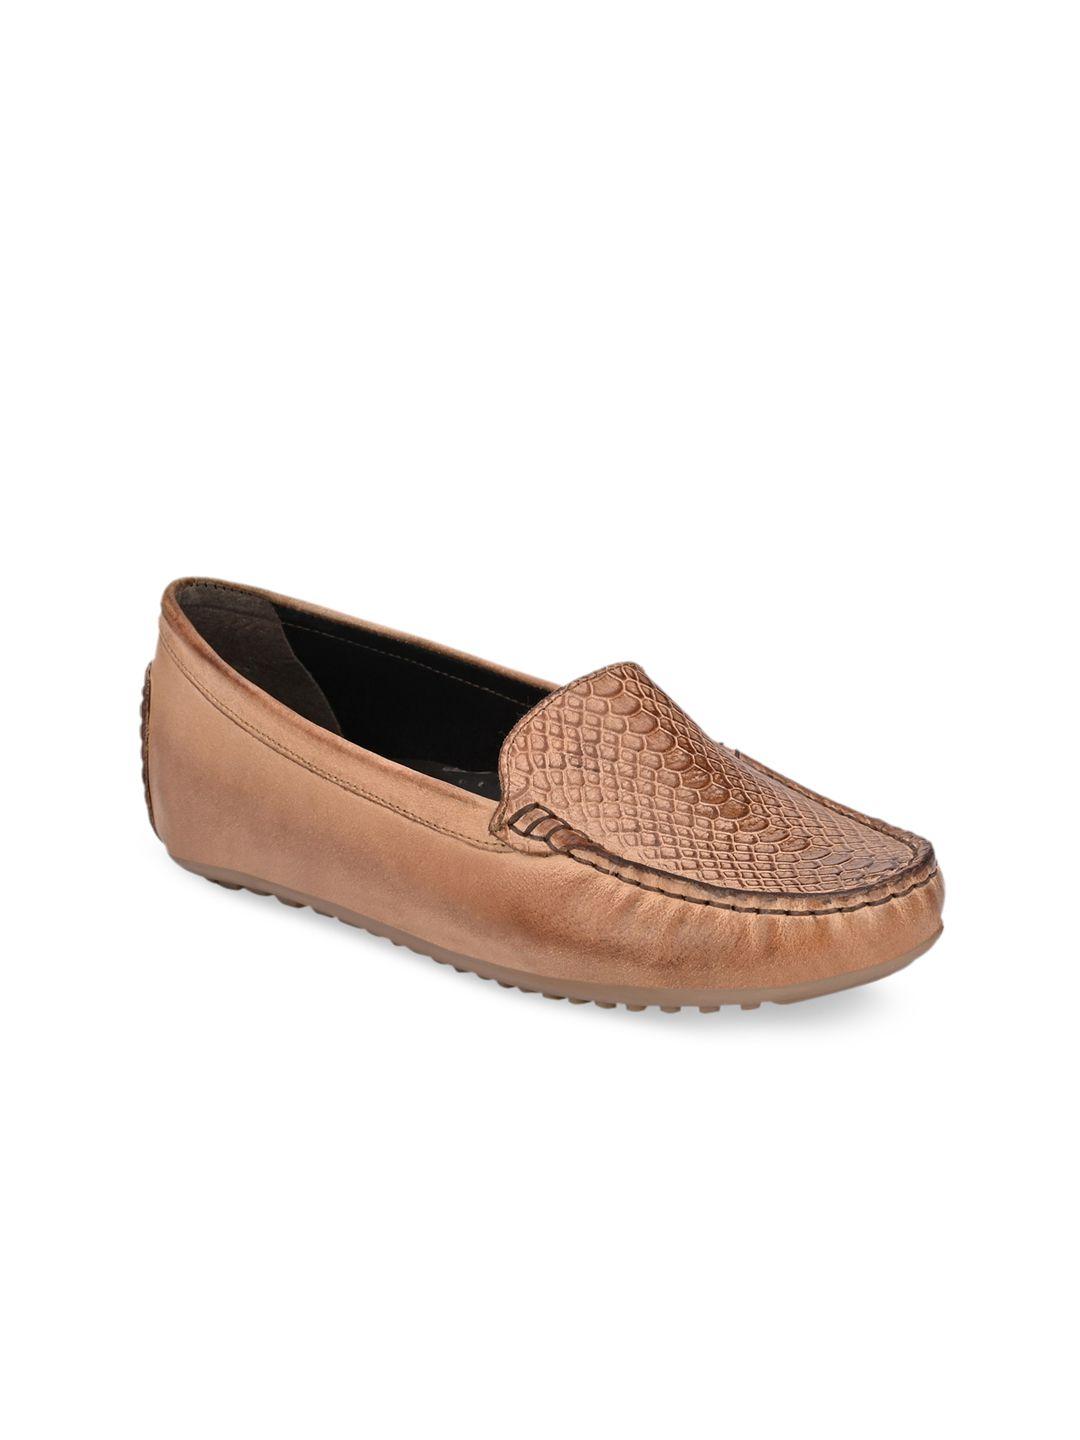 carlo romano women tan brown textured leather loafers